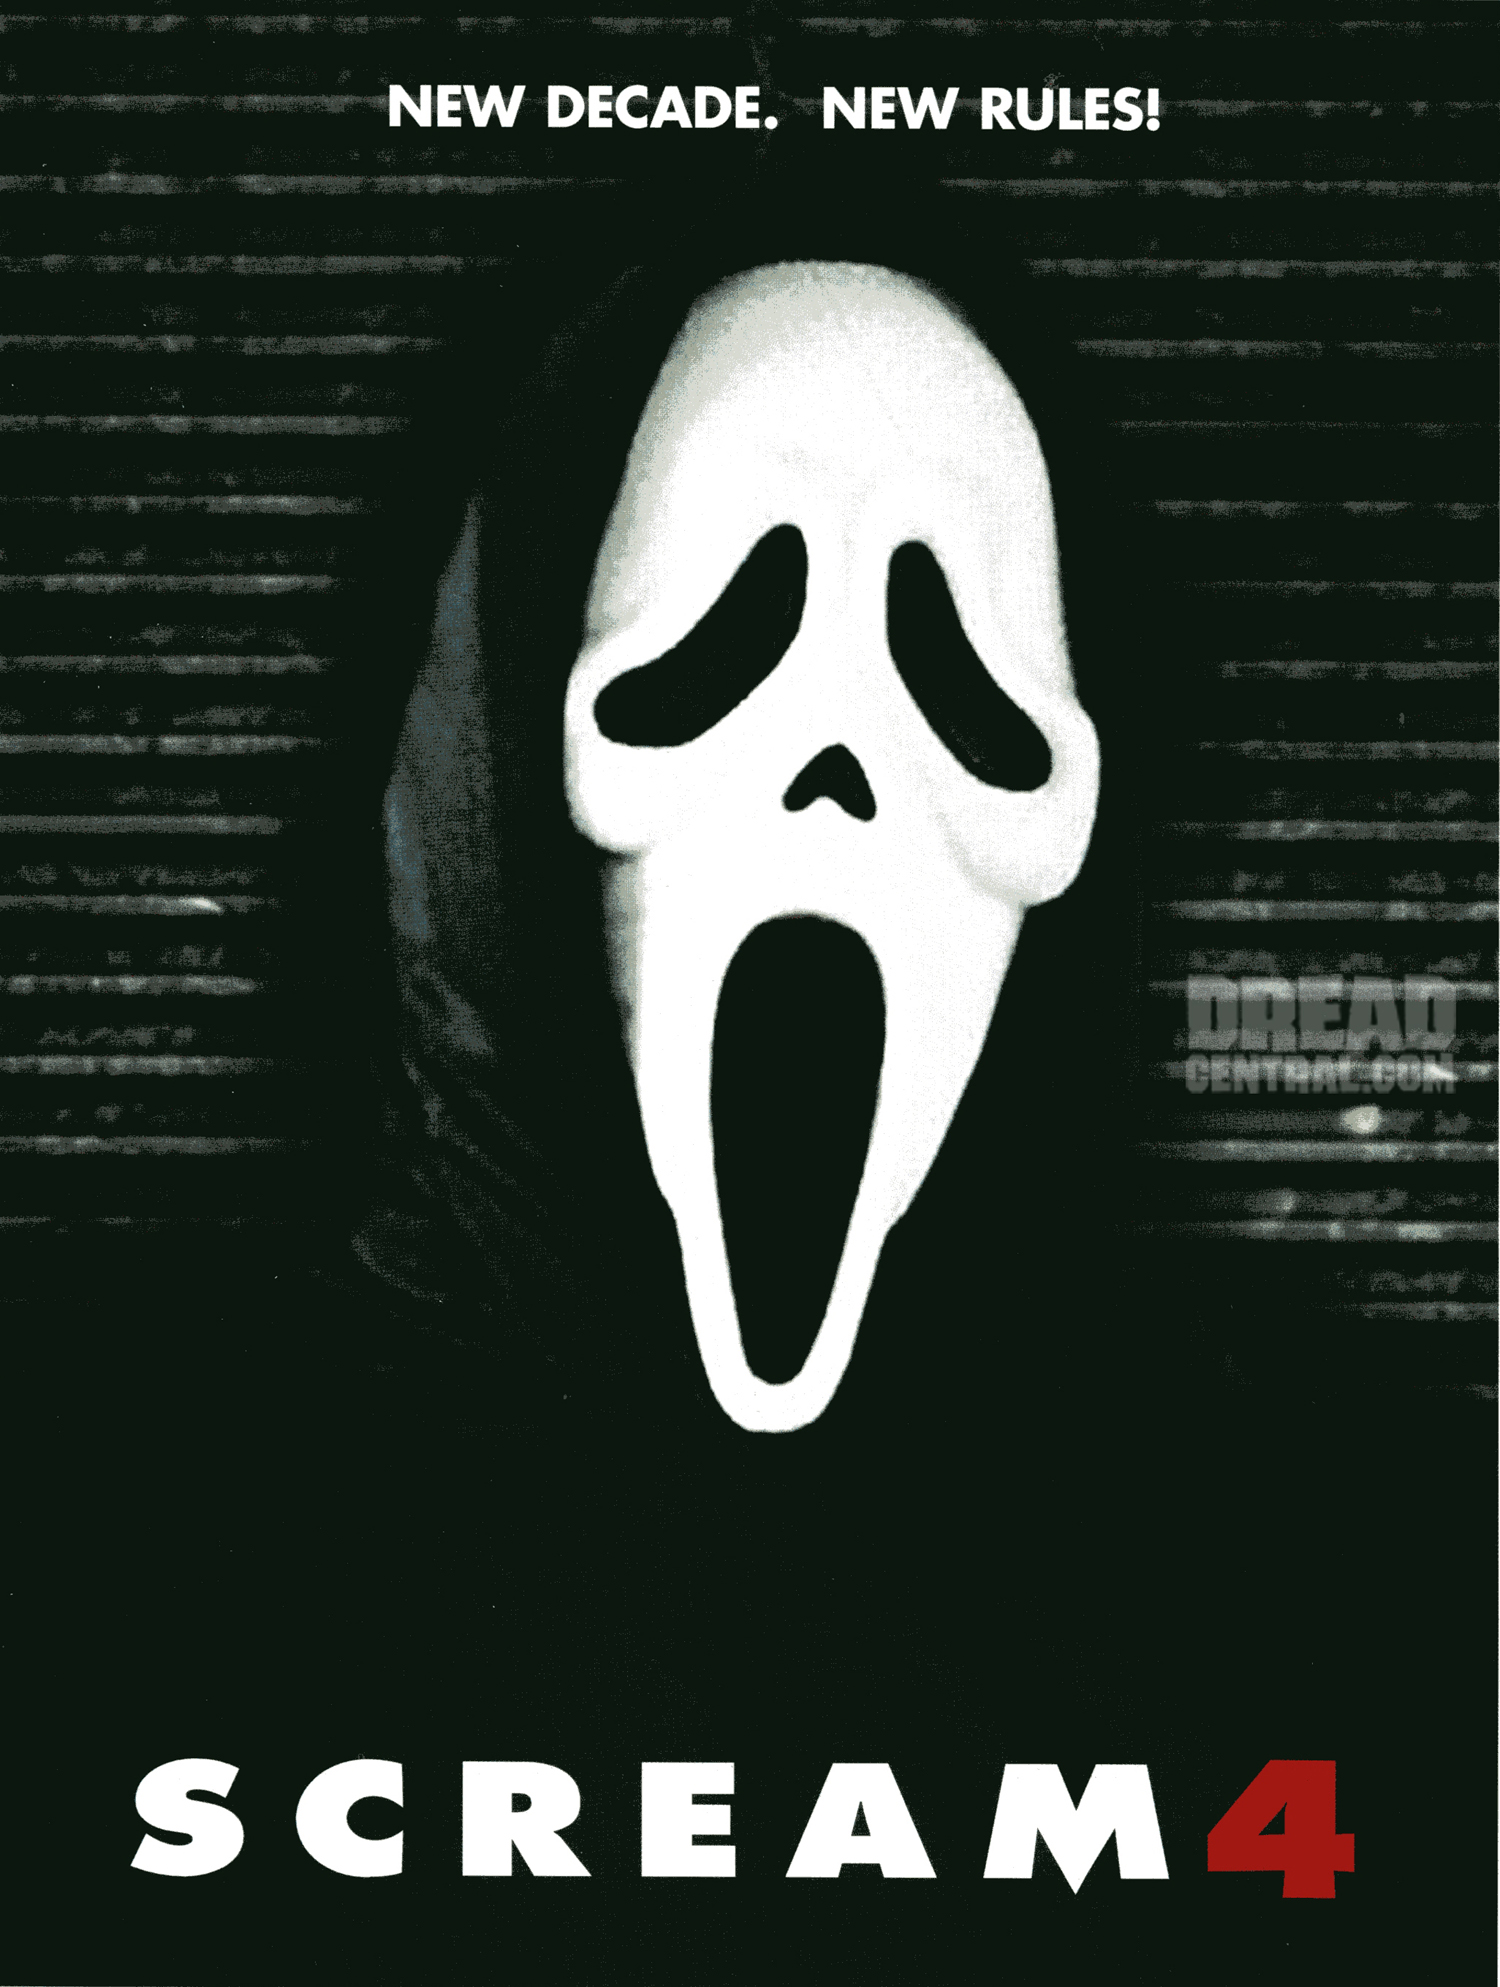 http://ghostradio.files.wordpress.com/2009/11/scream4poster.jpg